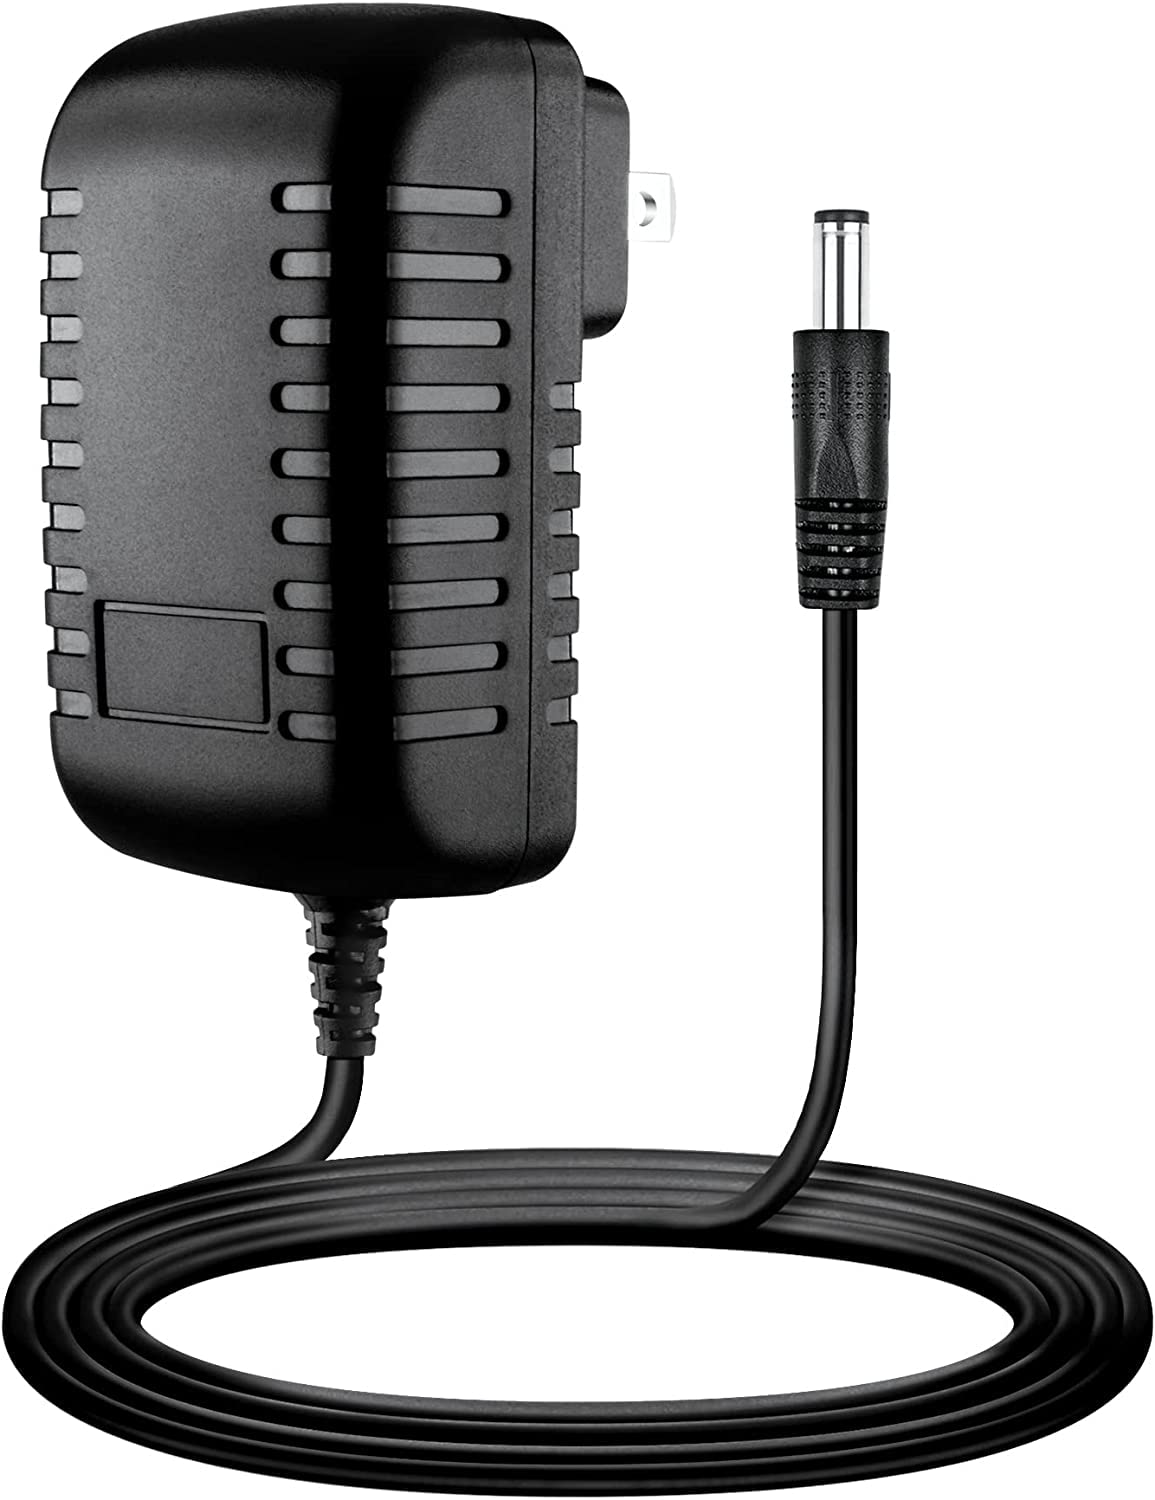 Guy-Tech AC DC Adapter Compatible with Black & Decker BD12PS BD12PSK 12V Cordless Drill Driver Smart Select B&D BD 12V DC 12VDC 12 VolSupply Cord